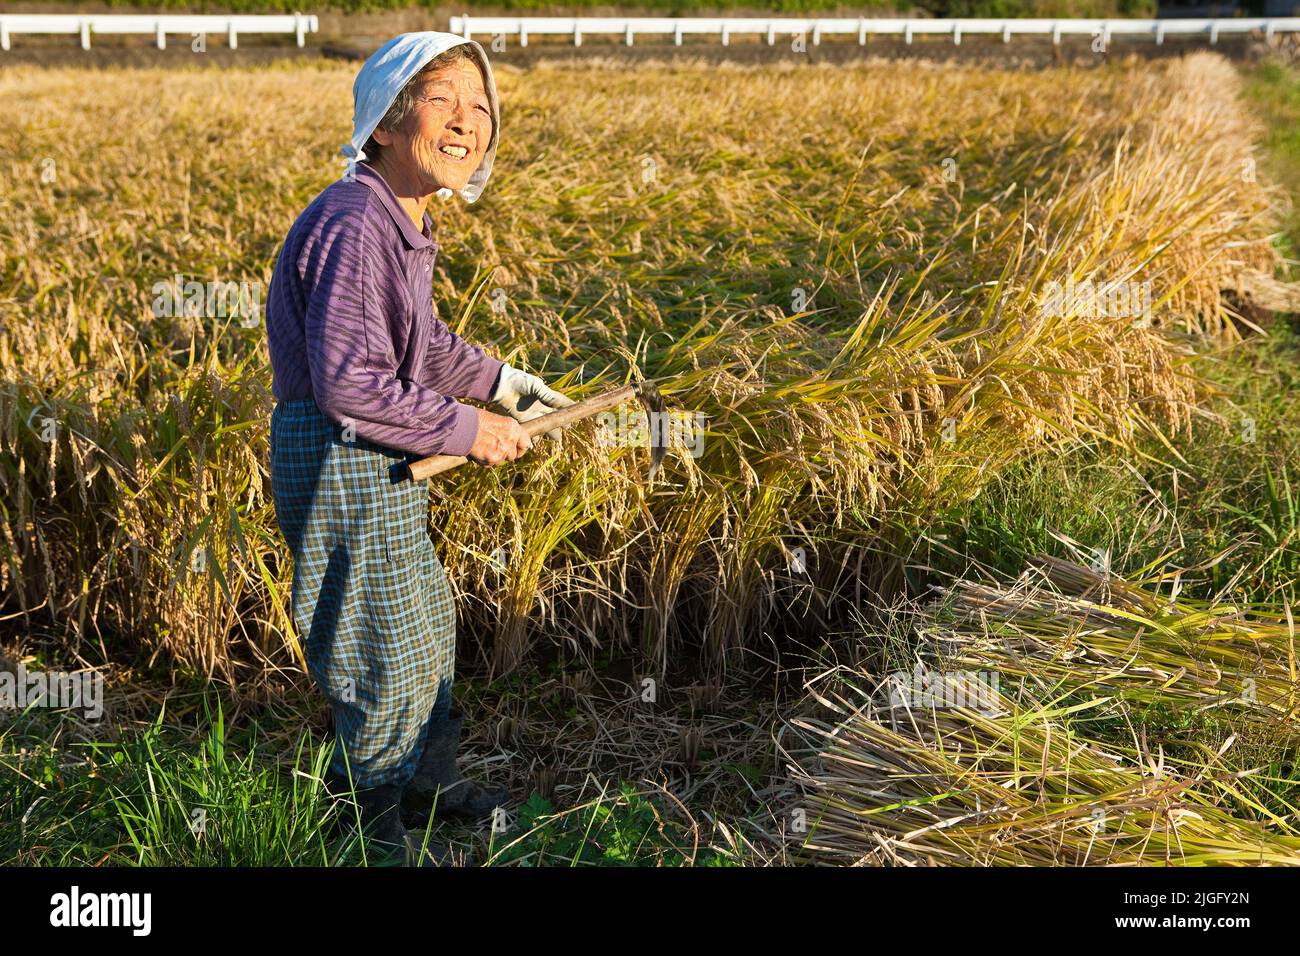 An elderly woman cuts rice stalks at harvest in rural Kumamoto, Kyushu, in Japan Stock Photo